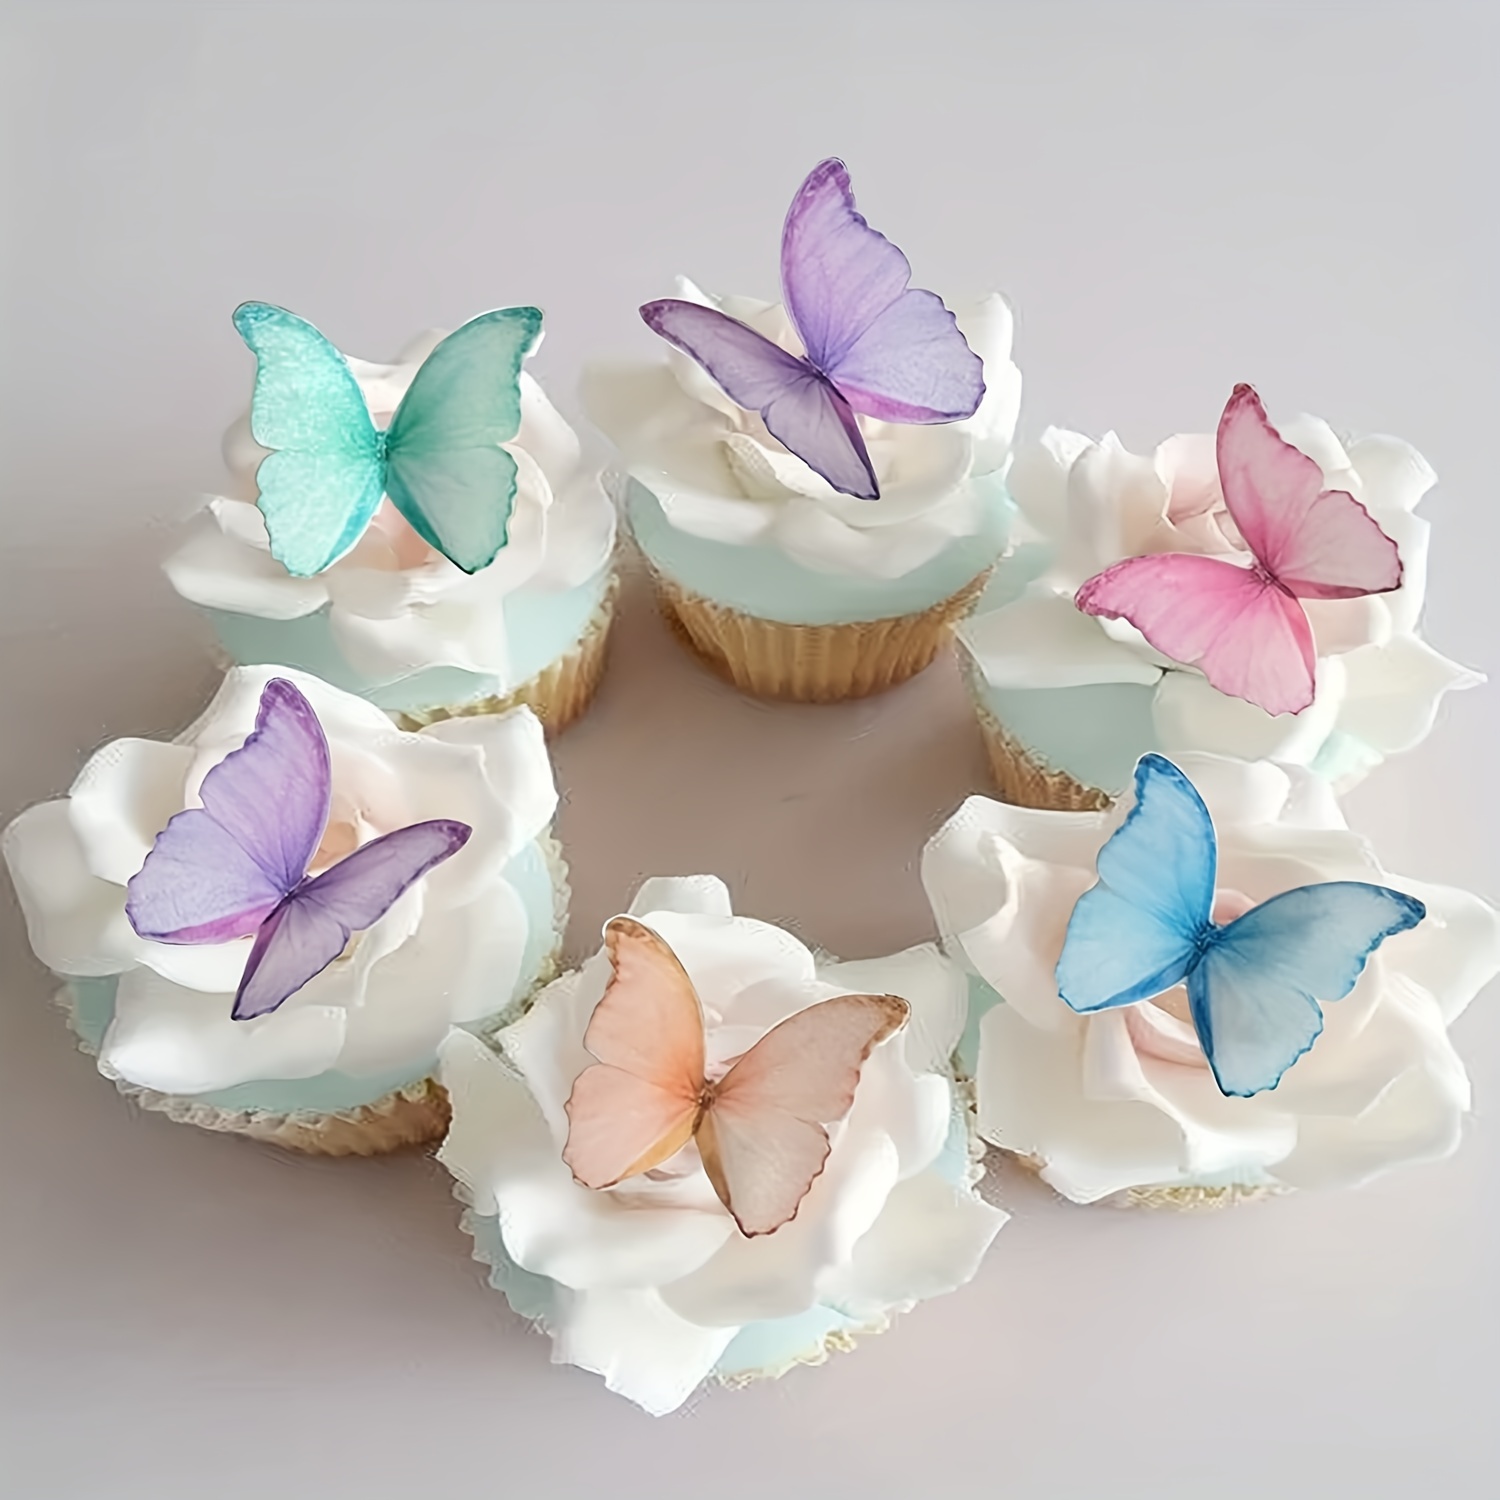 28 adornos comestibles para pasteles o cupcakes de mariposas arcoíris. Mariposas  de papel de oblea de 1.5. Decoración de cumpleaños de jardín encantado. -   México